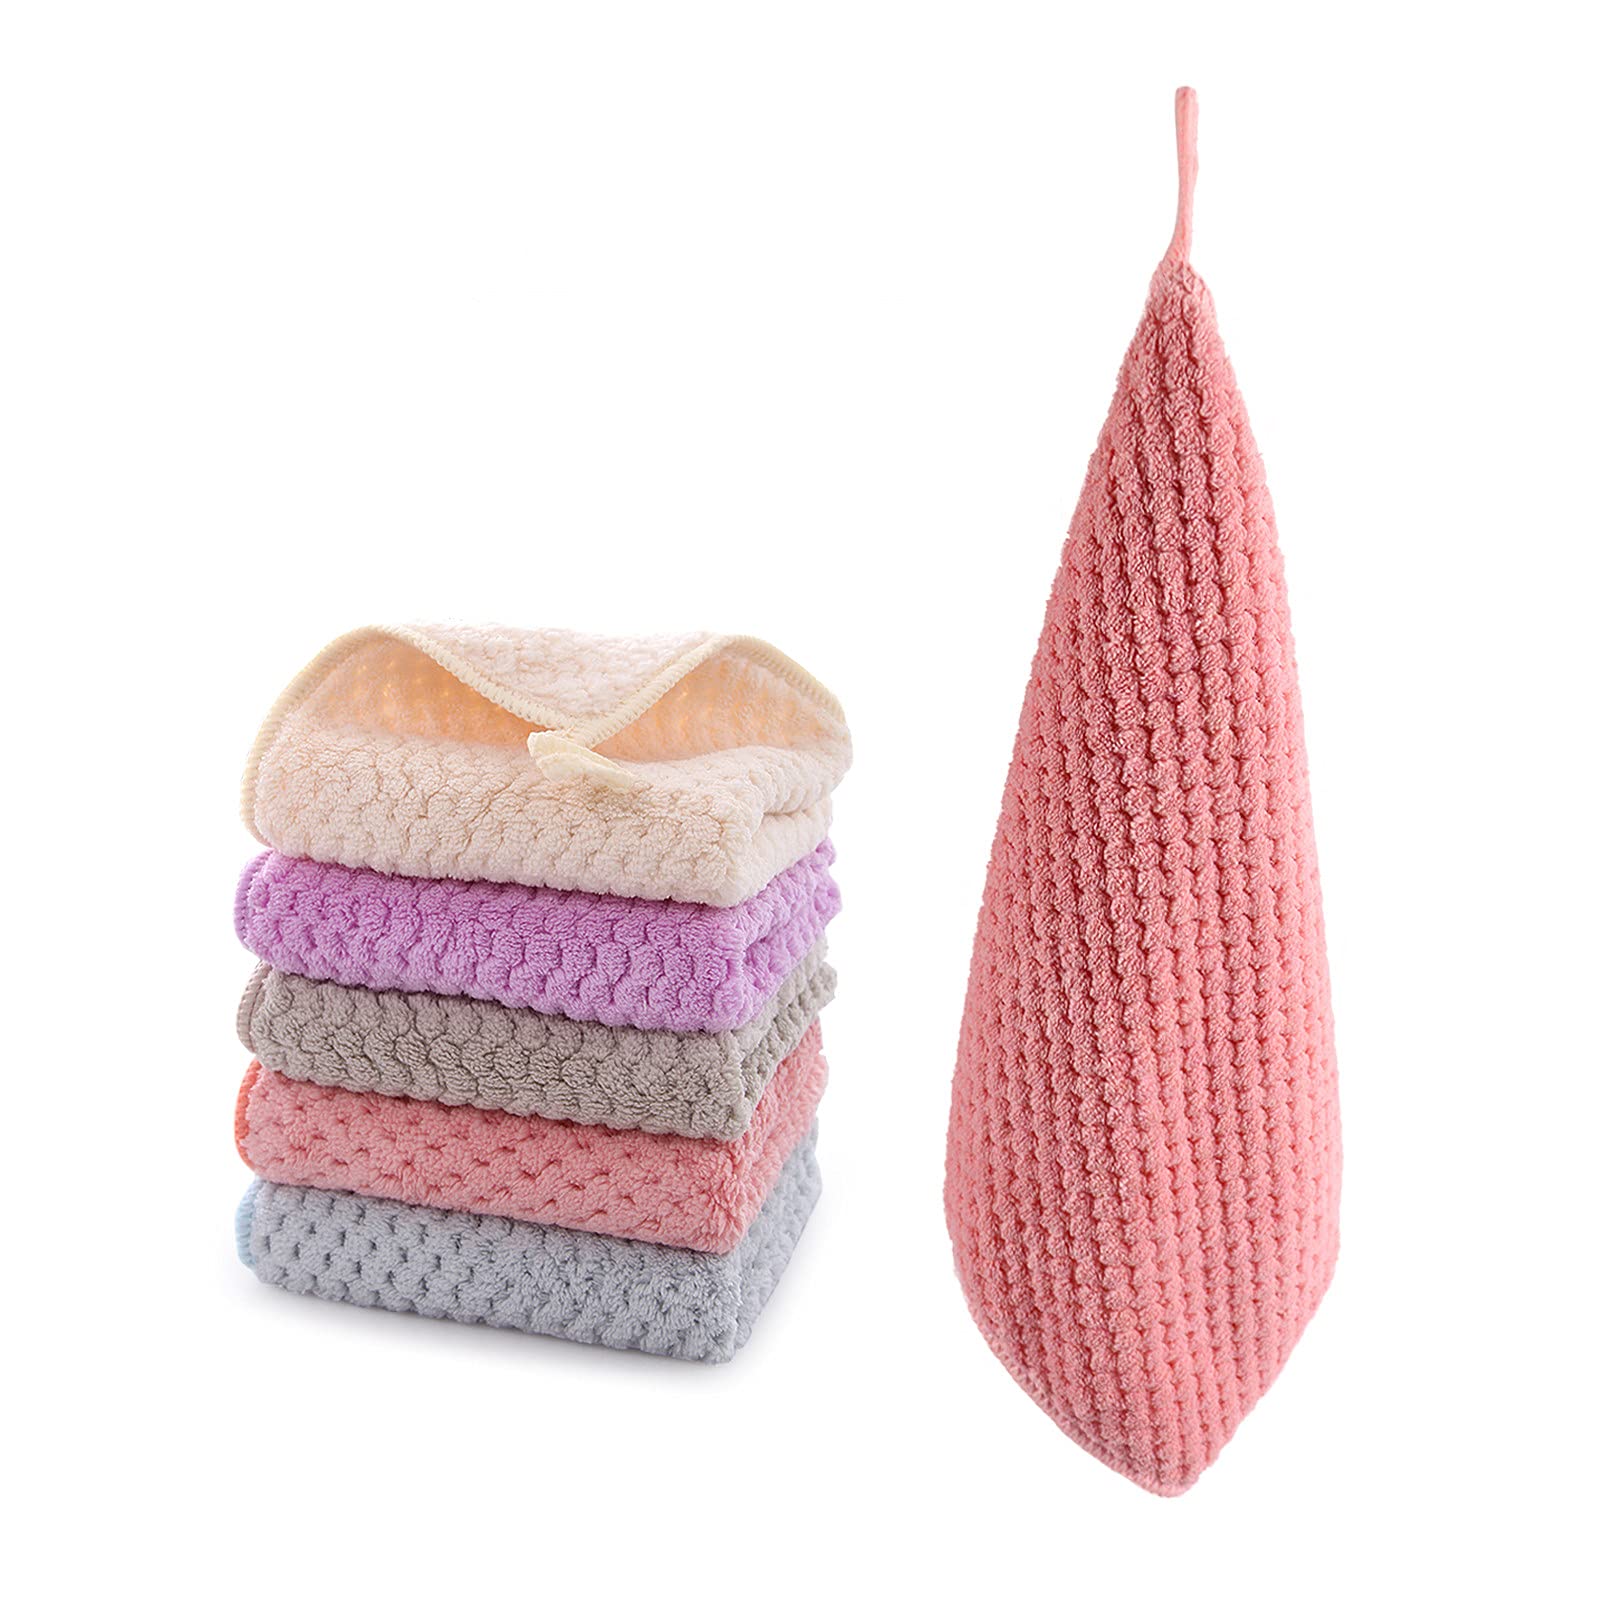 Absorbent Hanging Hand Towel, Cute Hand Towel with Hanging Loop 